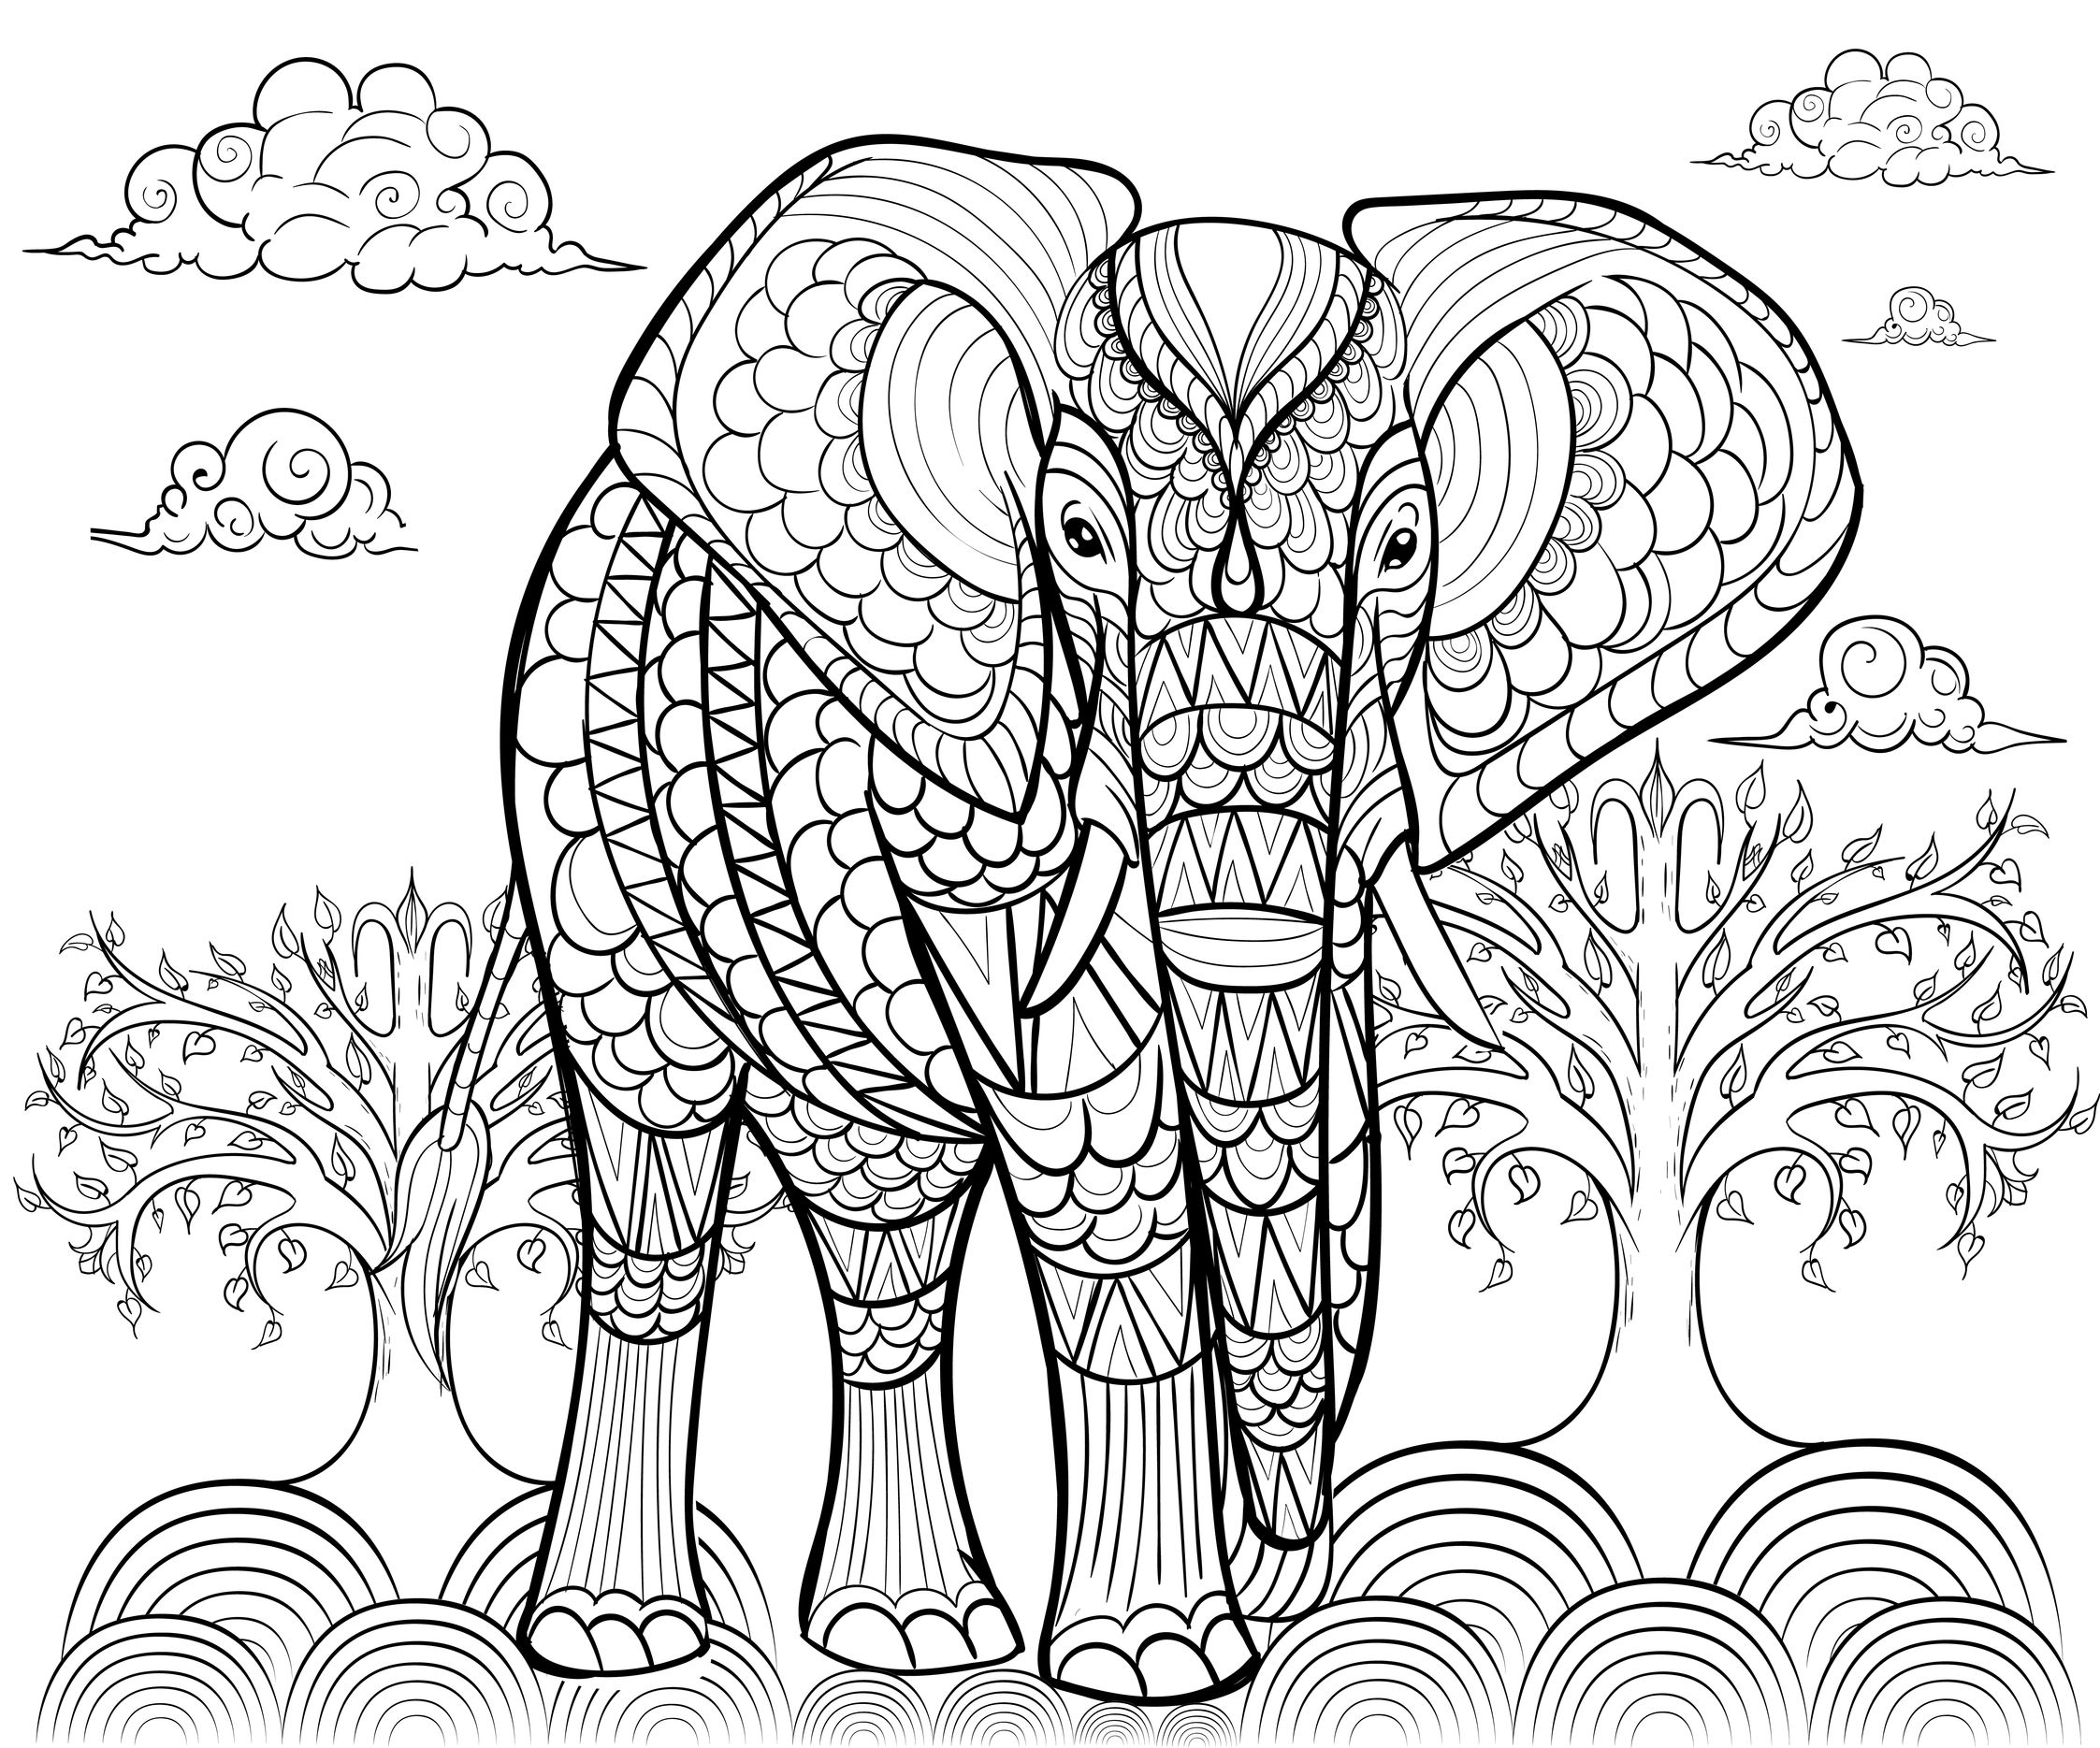 Elephant in the savanna, Artist : alfadanz   Source : 123rf